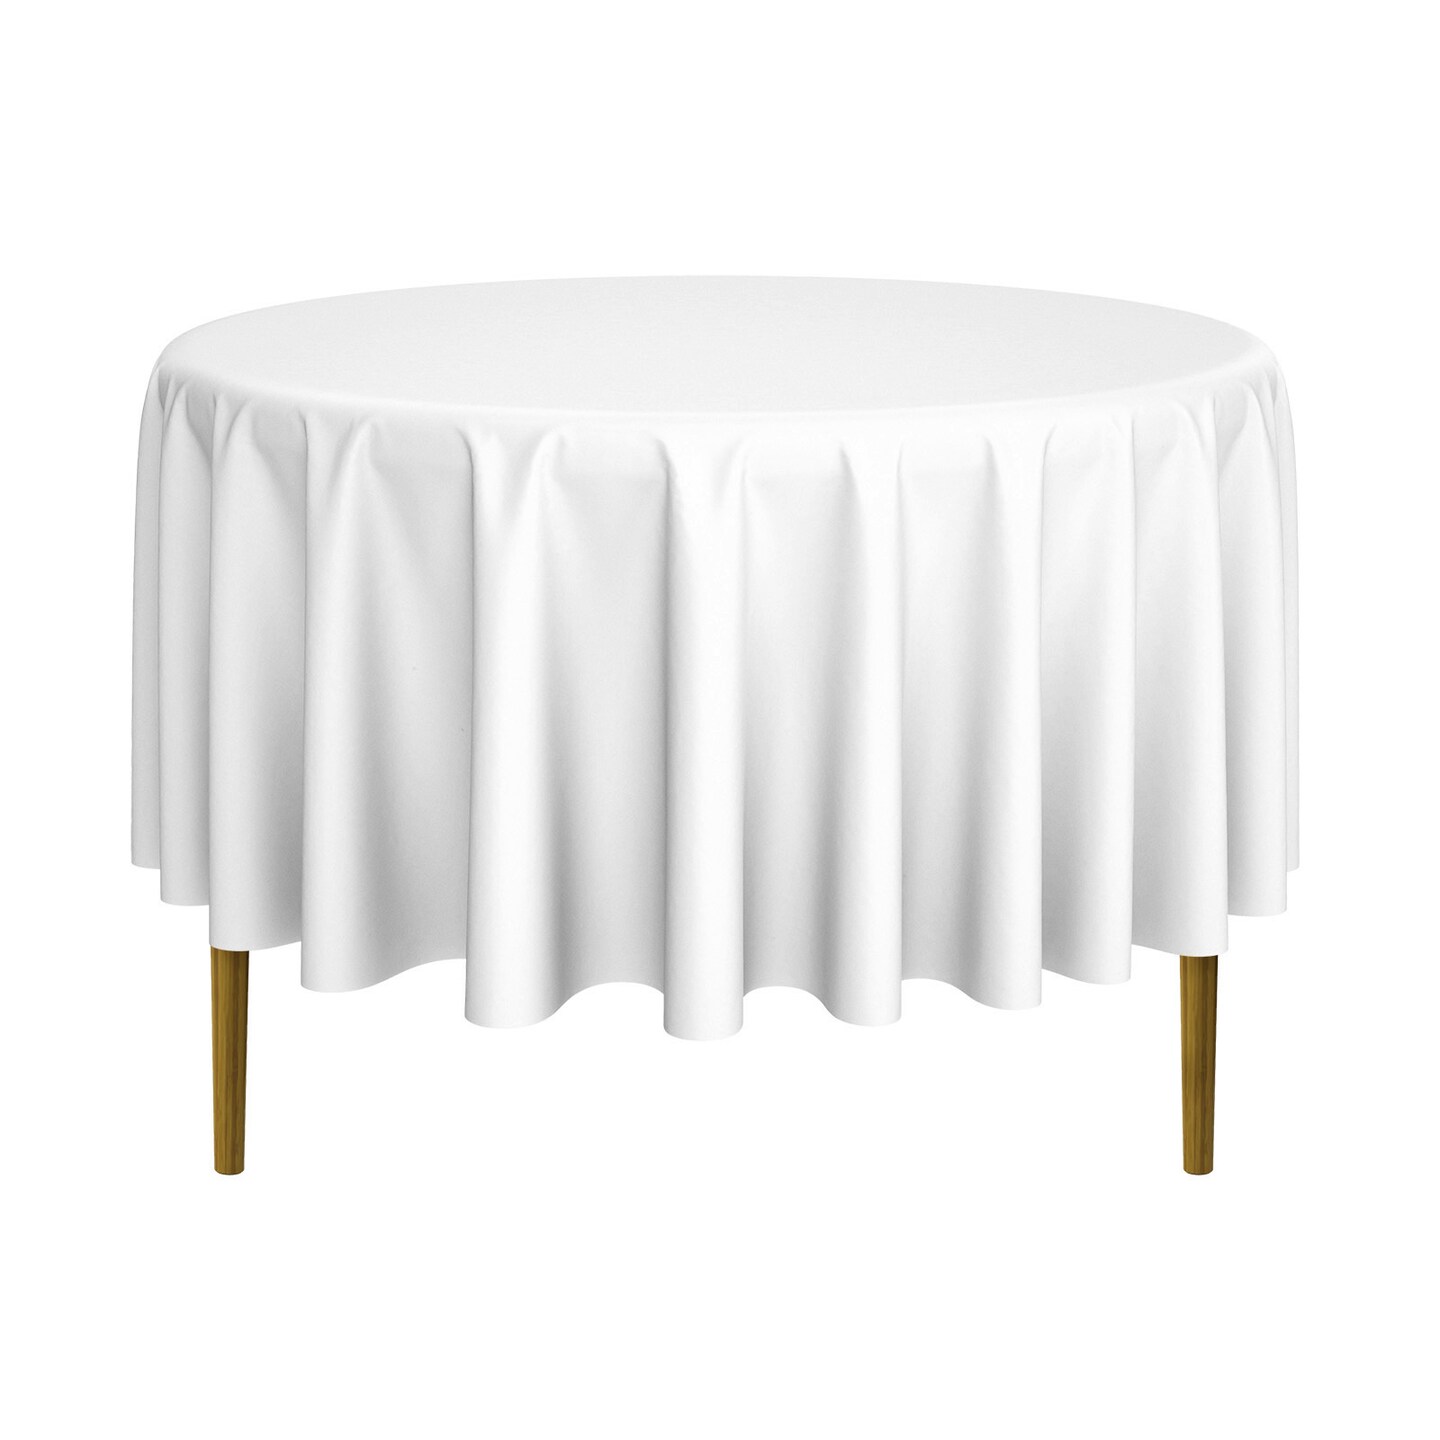 Lann&#x27;s Linens - 10 Premium Round Tablecloths for Wedding / Banquet / Restaurant - Polyester Fabric Table Cloths